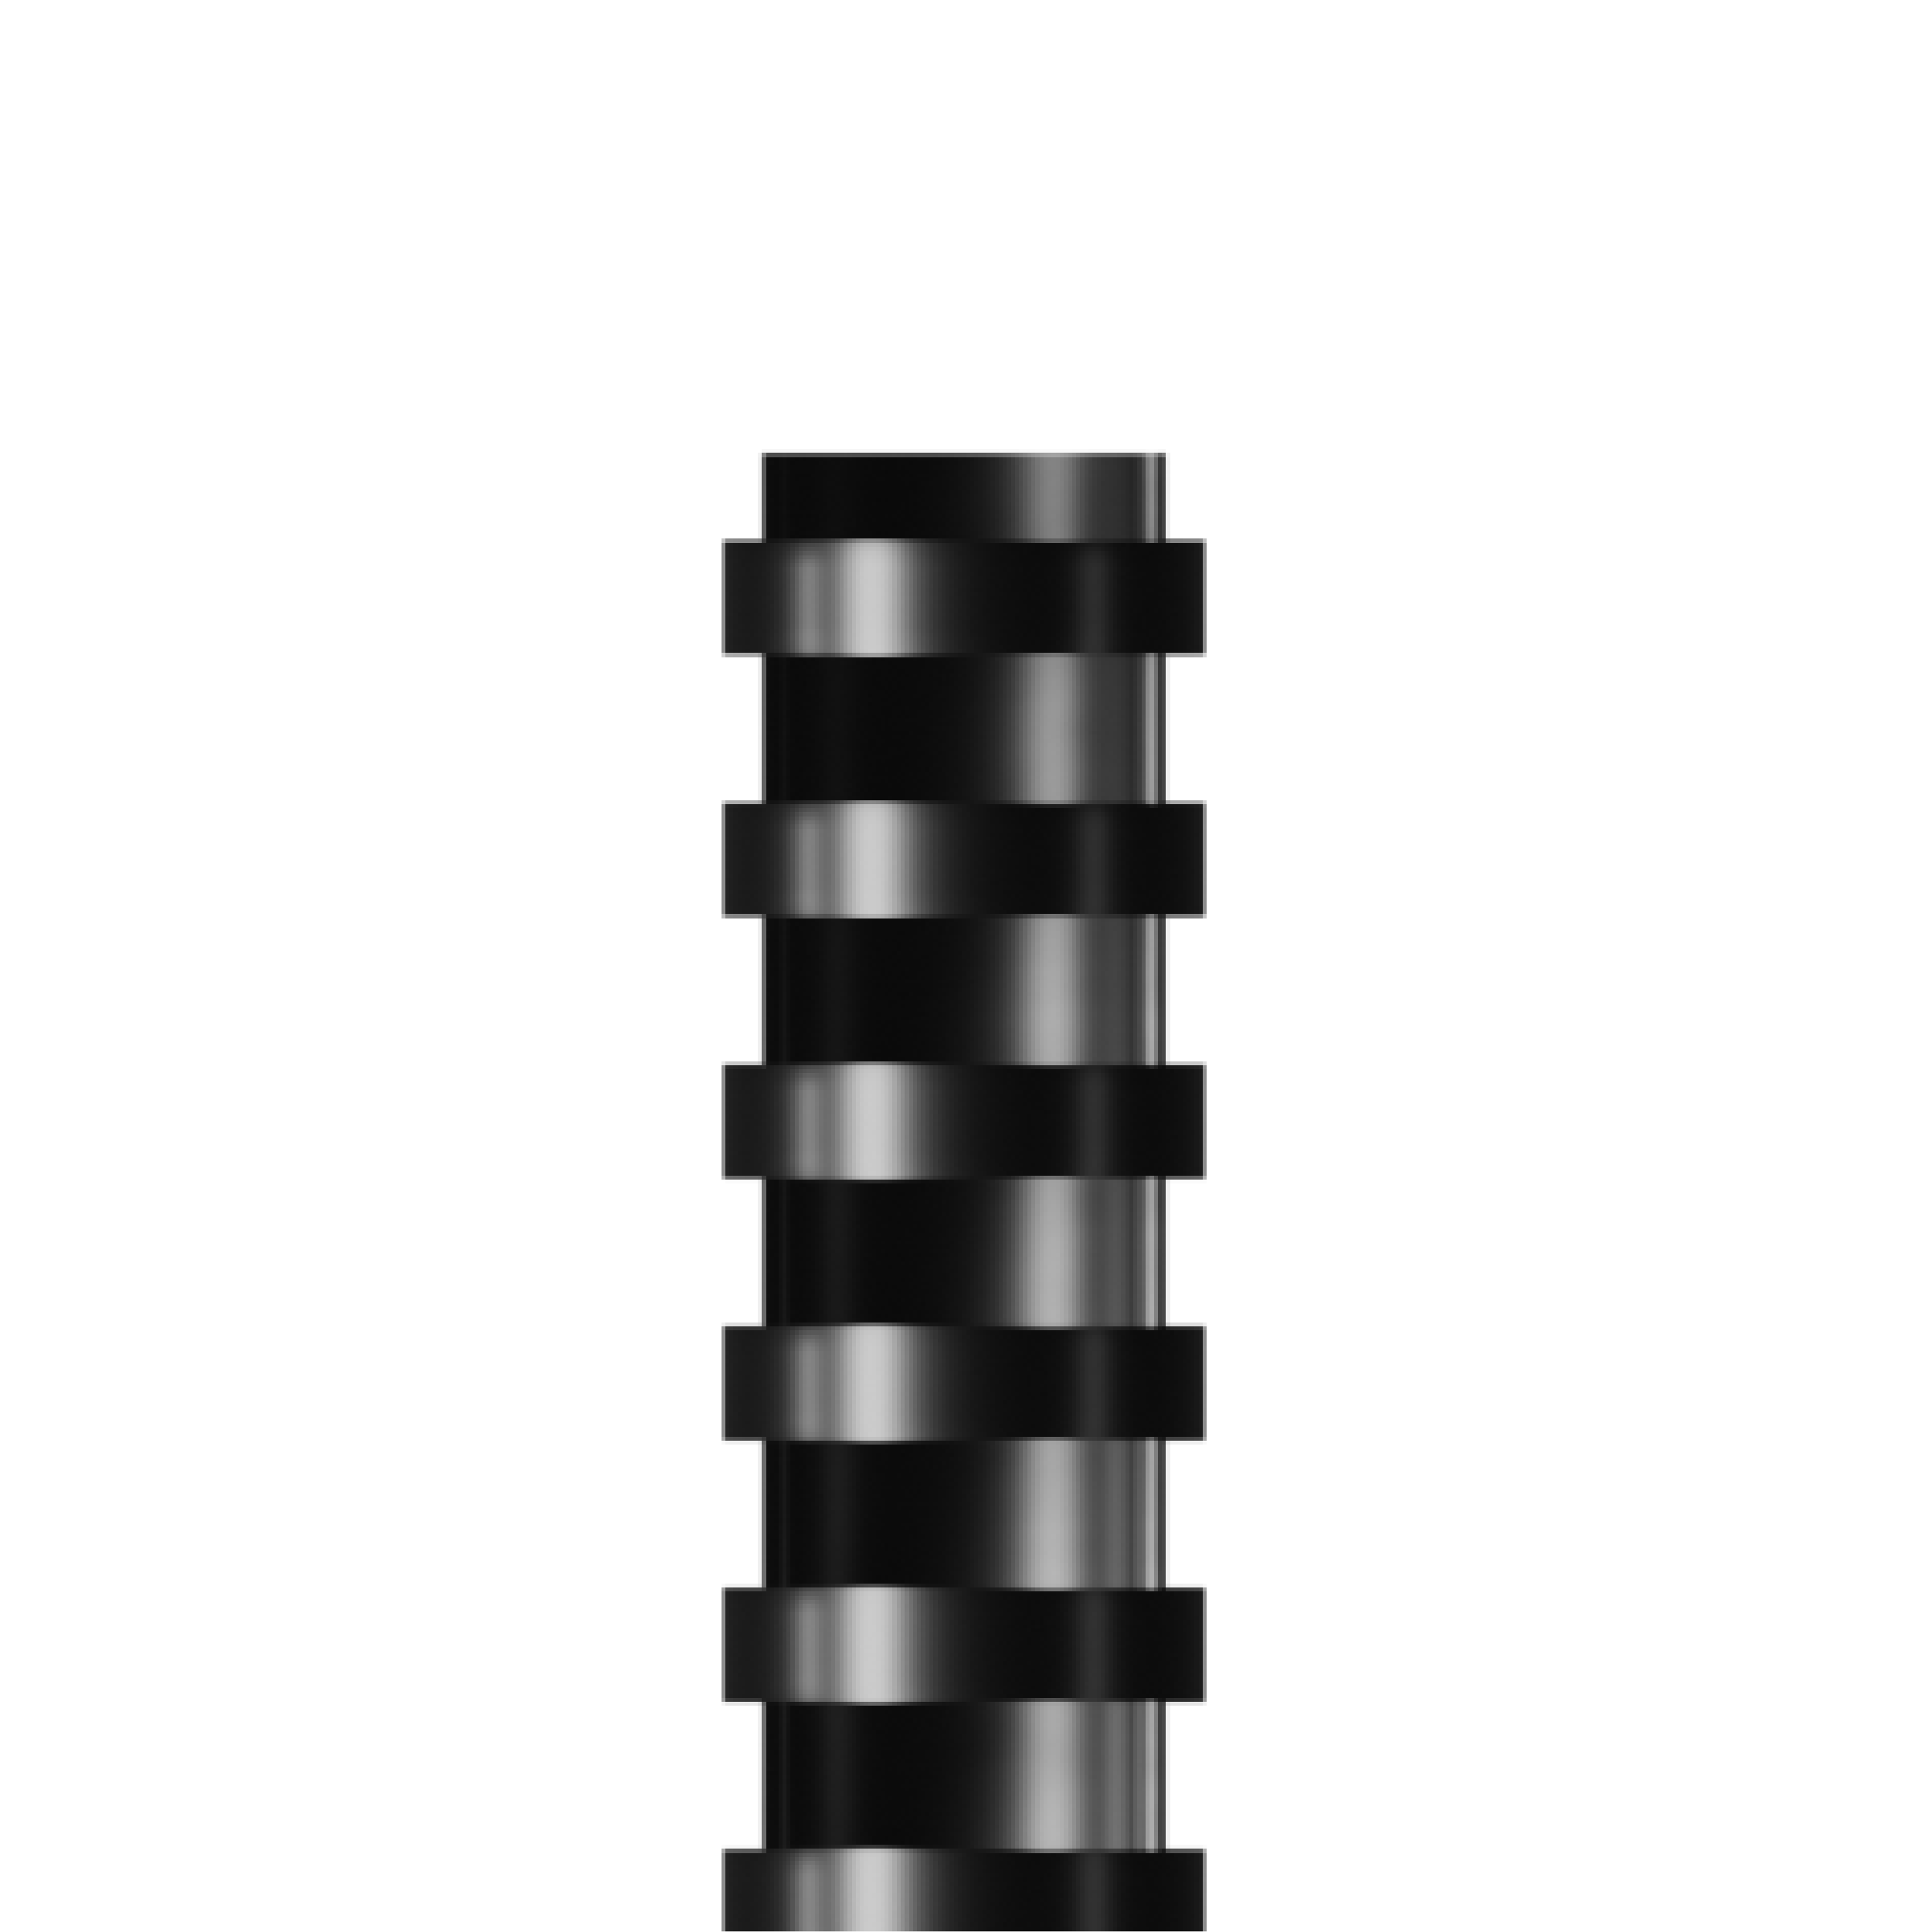 RAADO 25mm Plastic Spiral Binding Comb, Black